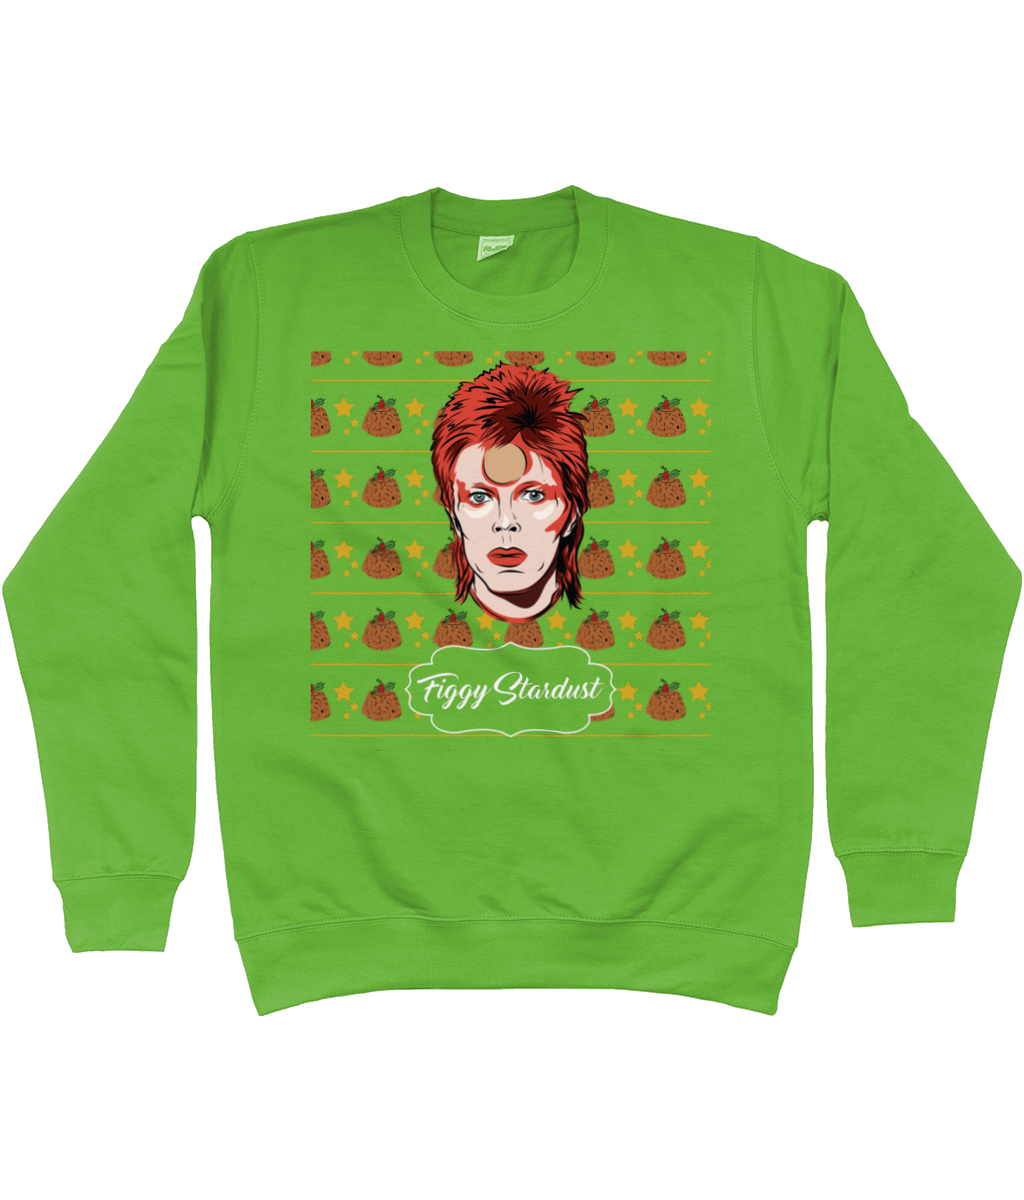 Figgy Stardust Christmas jumper - kids'